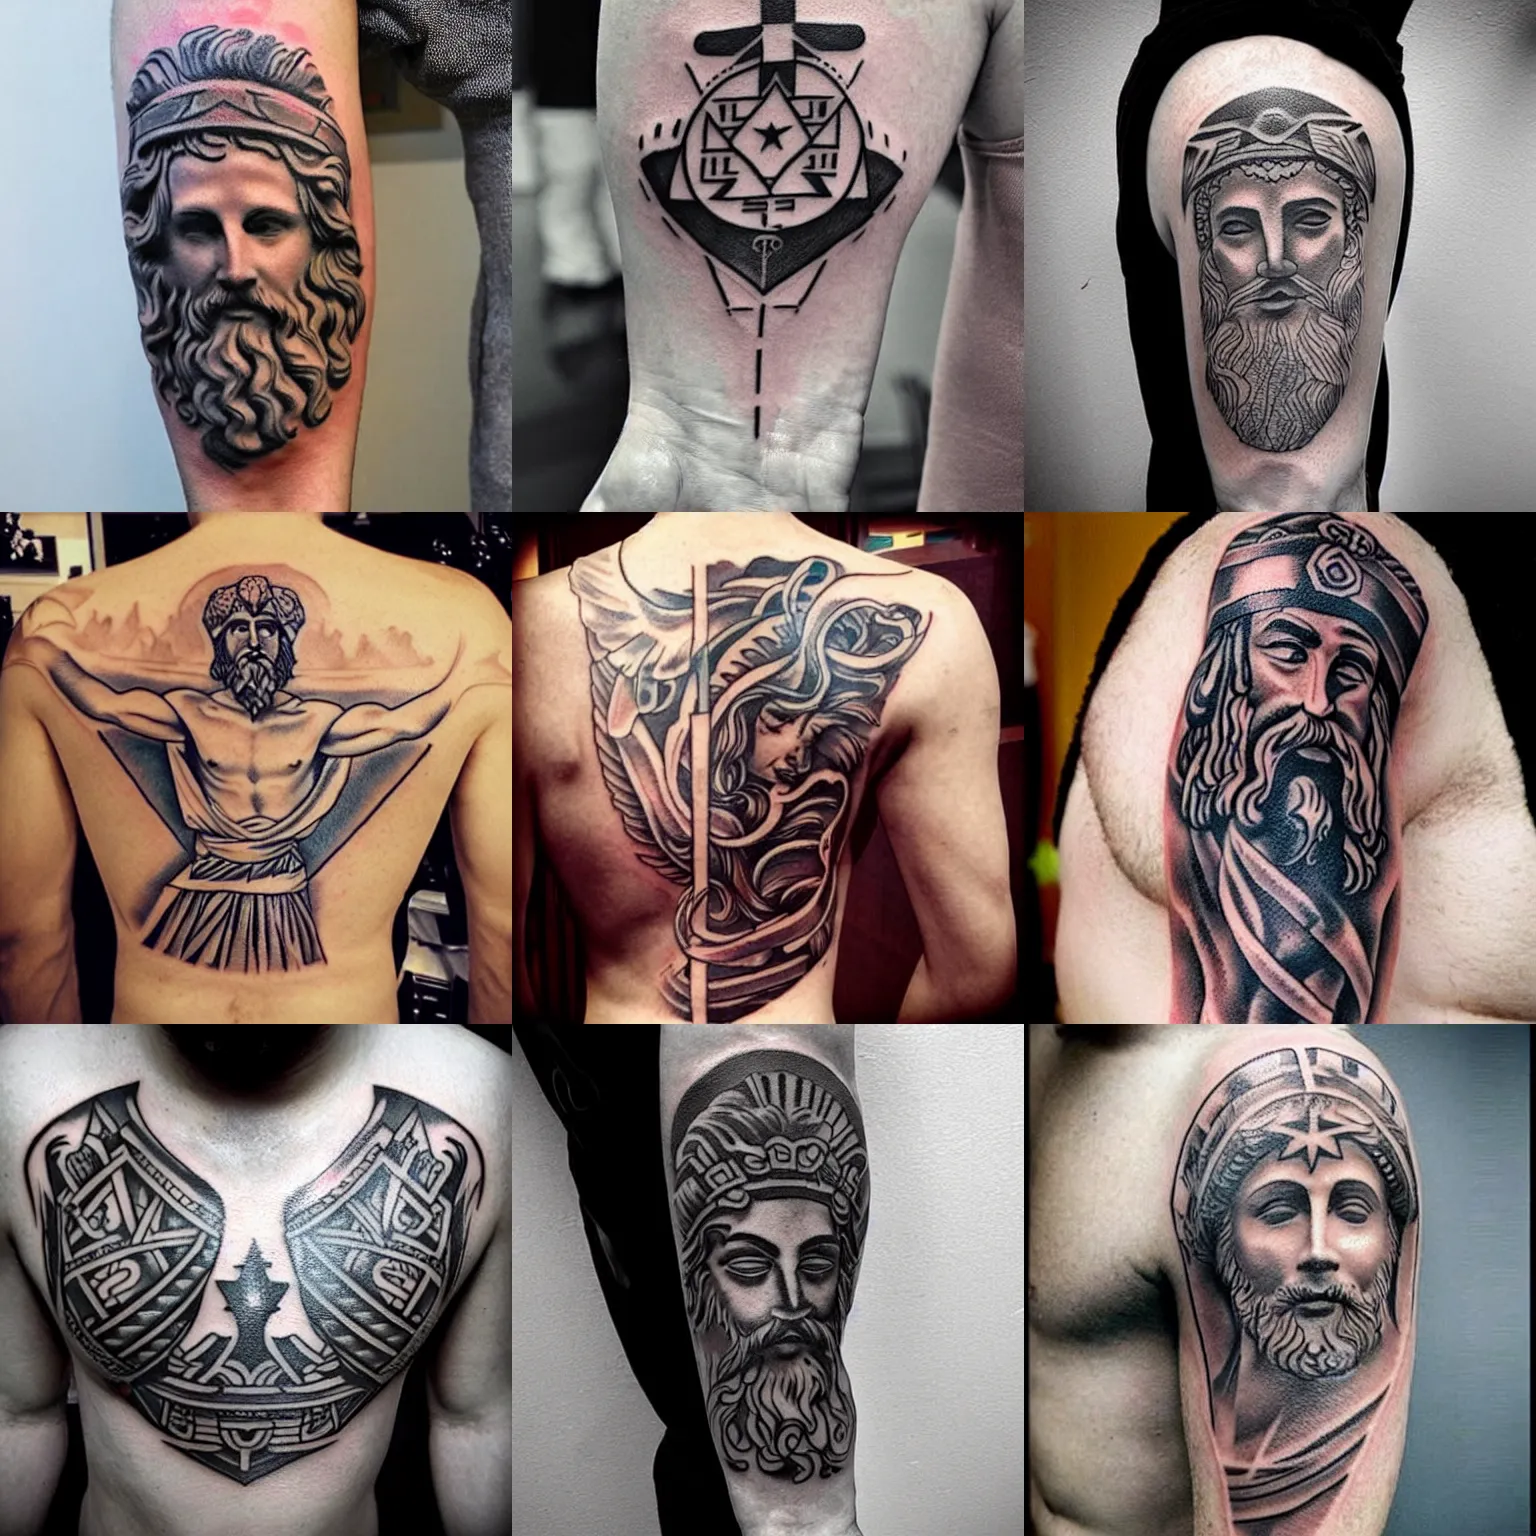 Hercules Greek Mythology Tattoo Designs by TattooSoulcom on DeviantArt